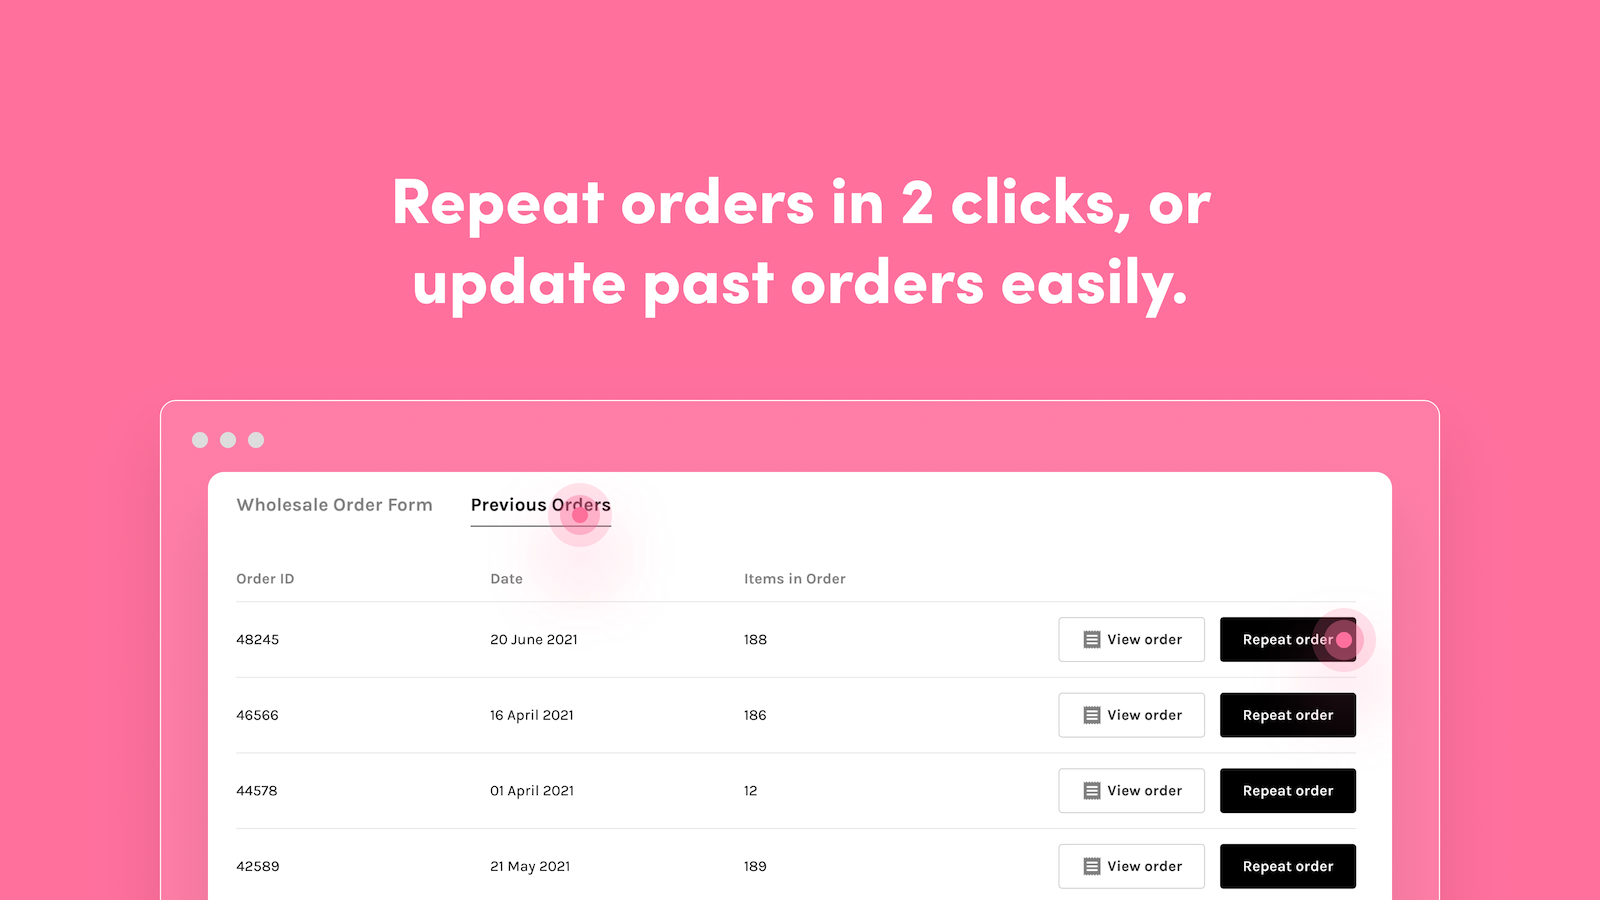 Repeat orders in 2 clicks, or update past orders easily.